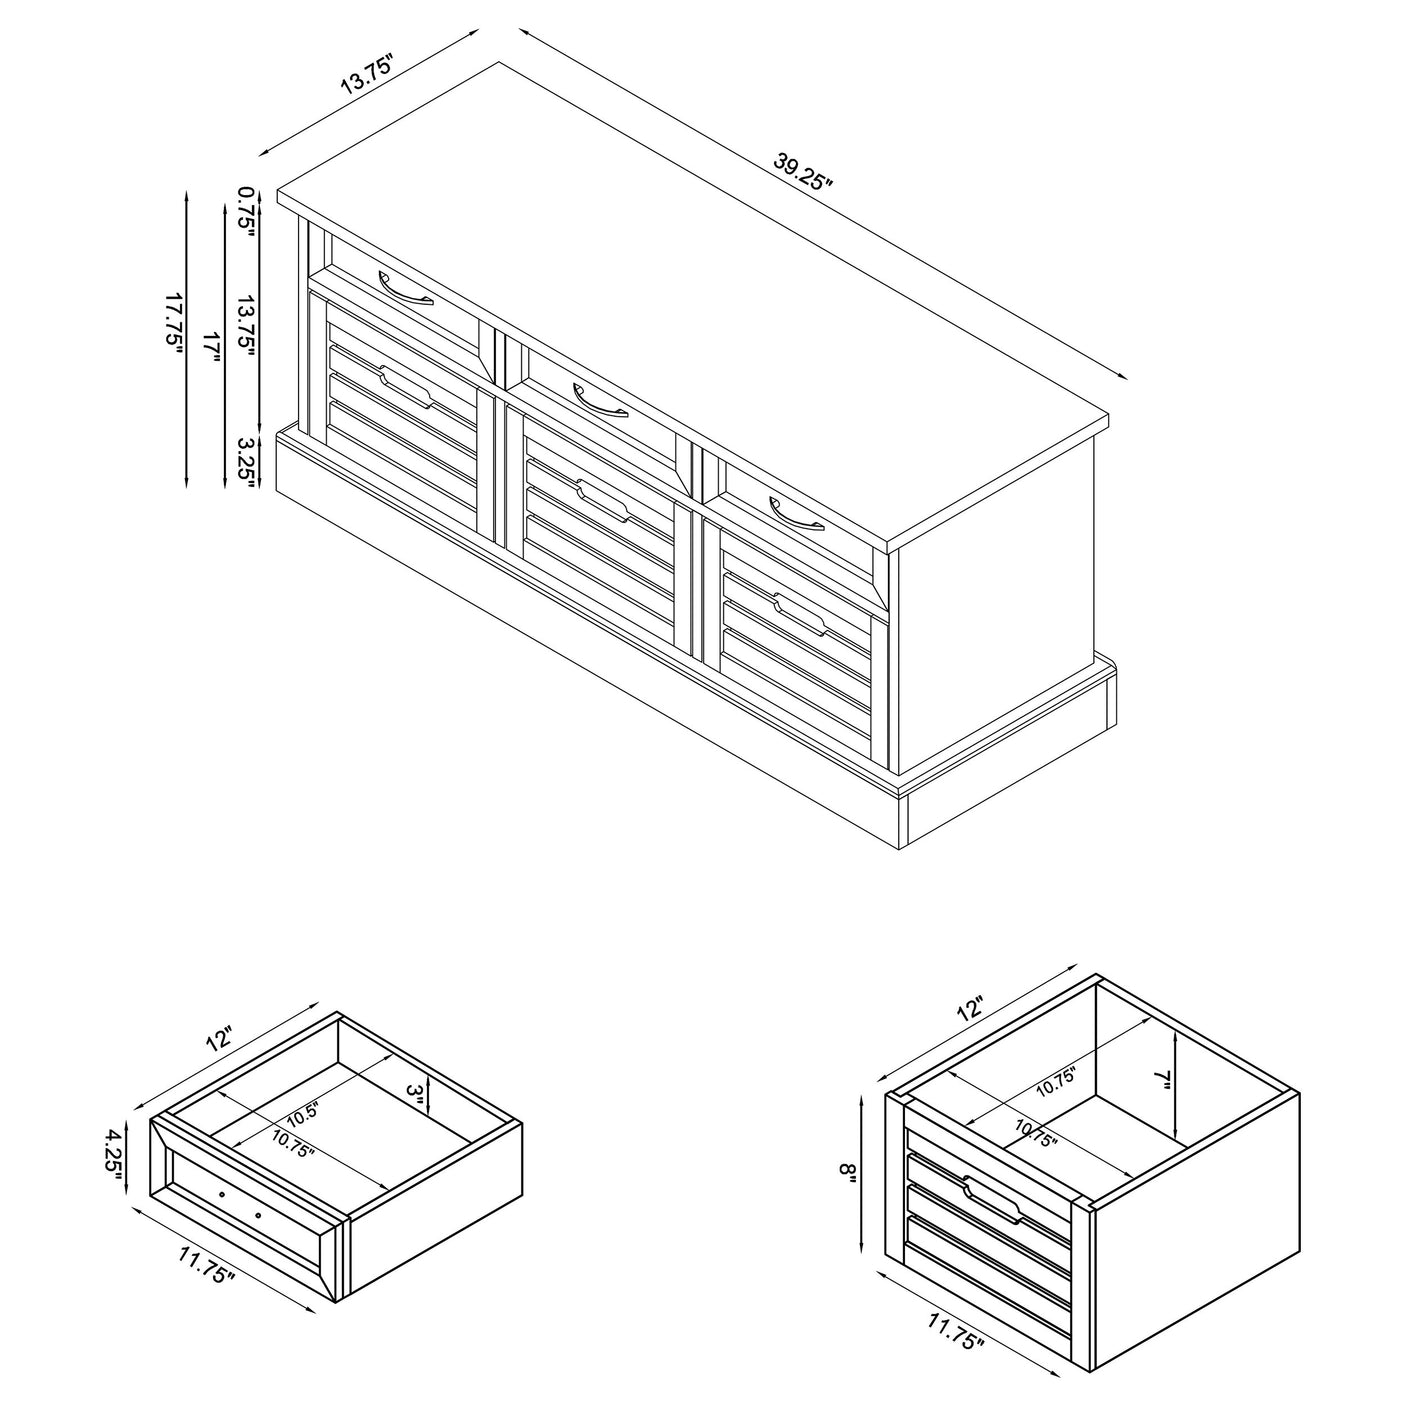 Storage Bench - Alma 3-drawer Storage Bench Weathered Brown and White